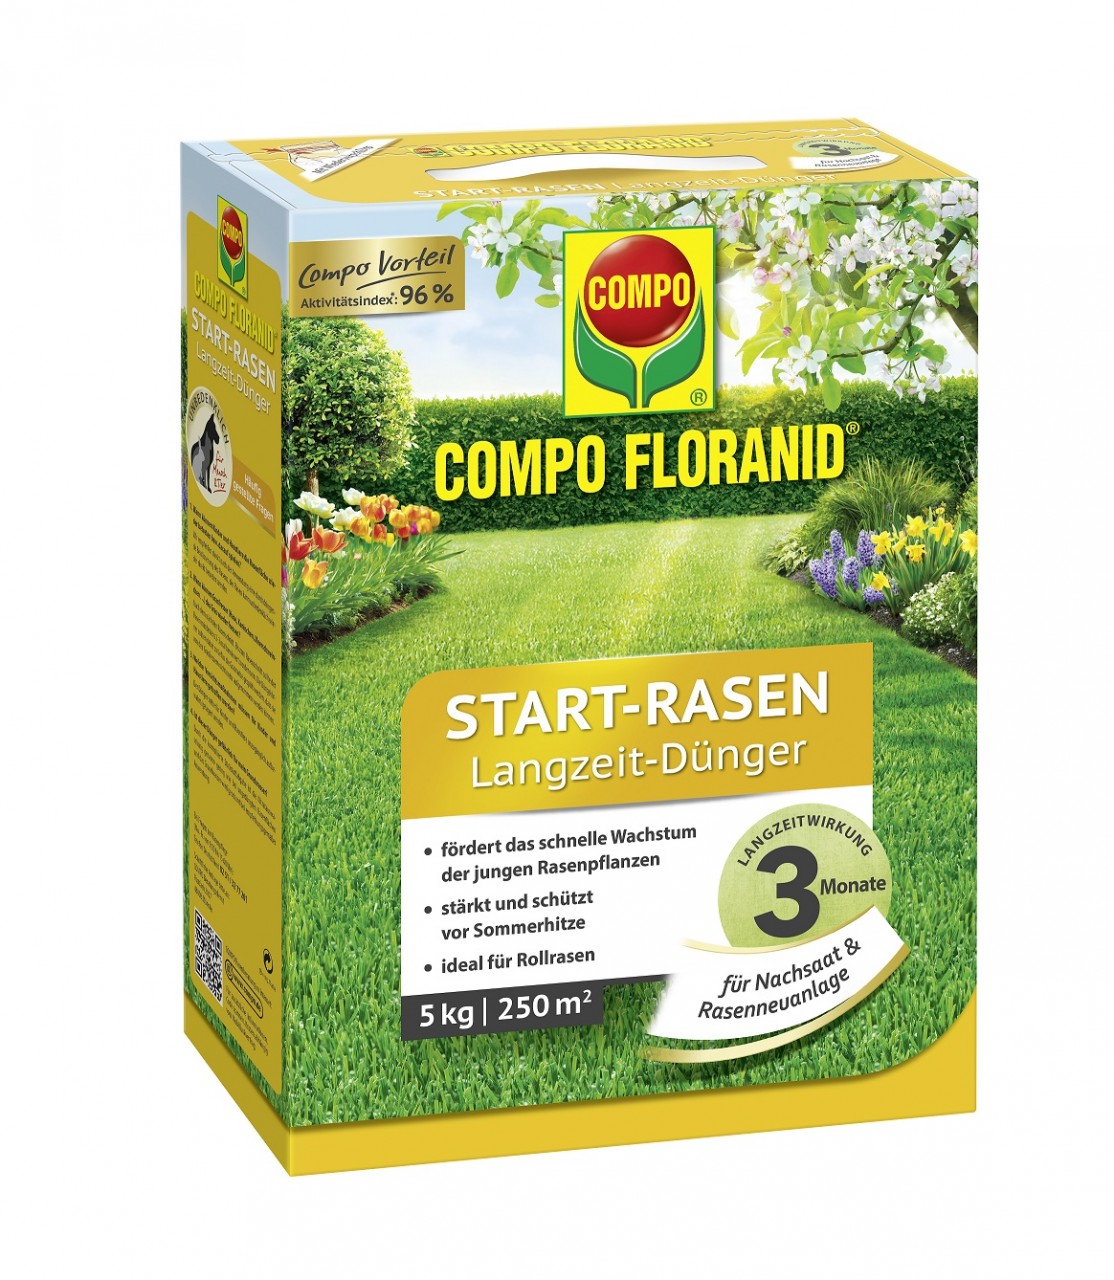 COMPO Floranid Start-Rasendünger 5 kg unter Compo